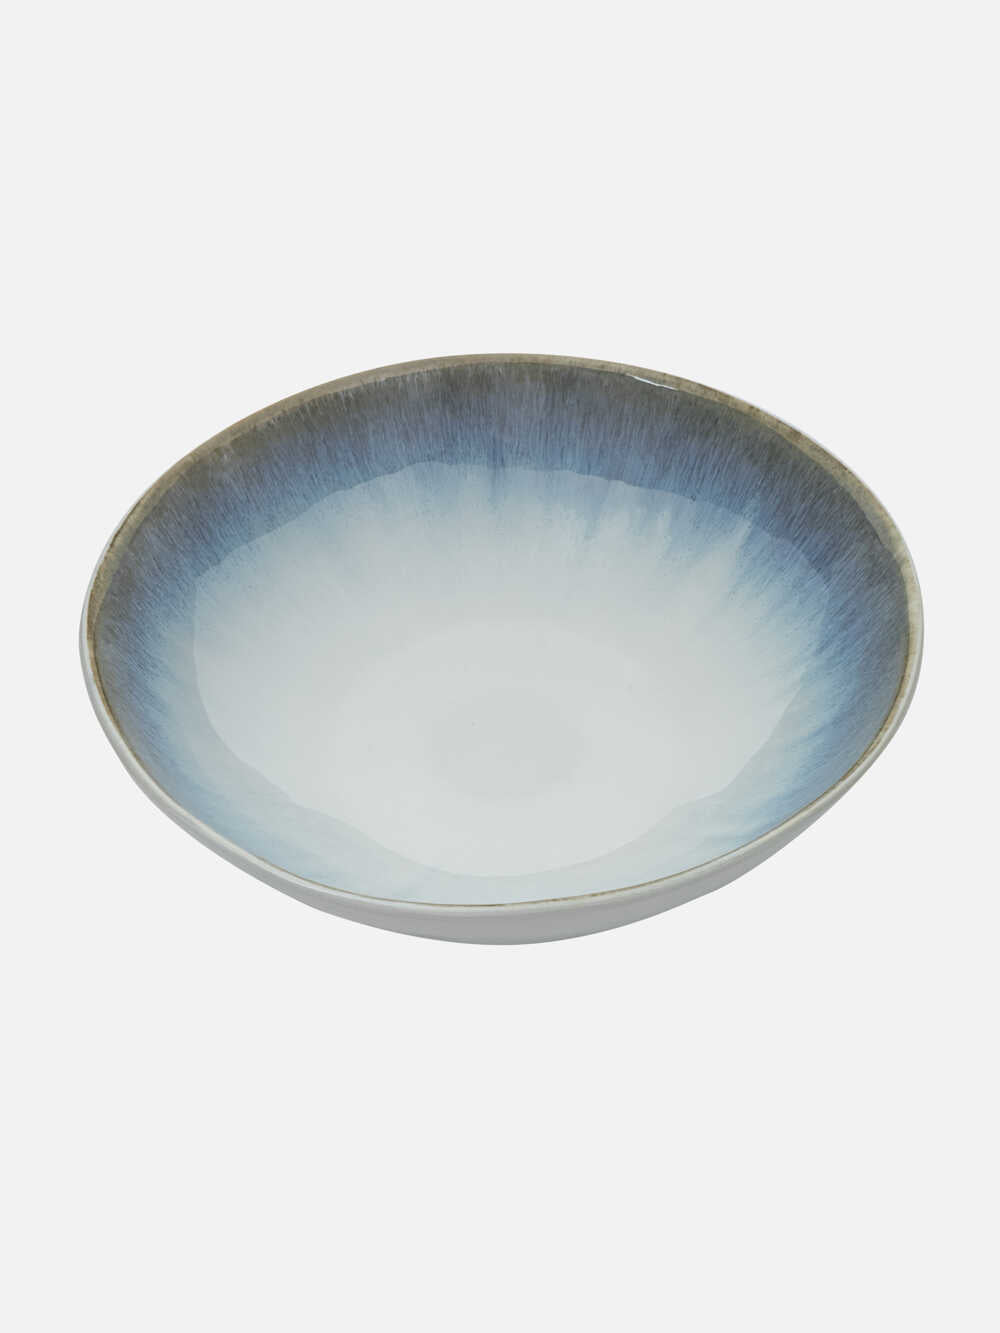 Shell ceramic Serving Bowl